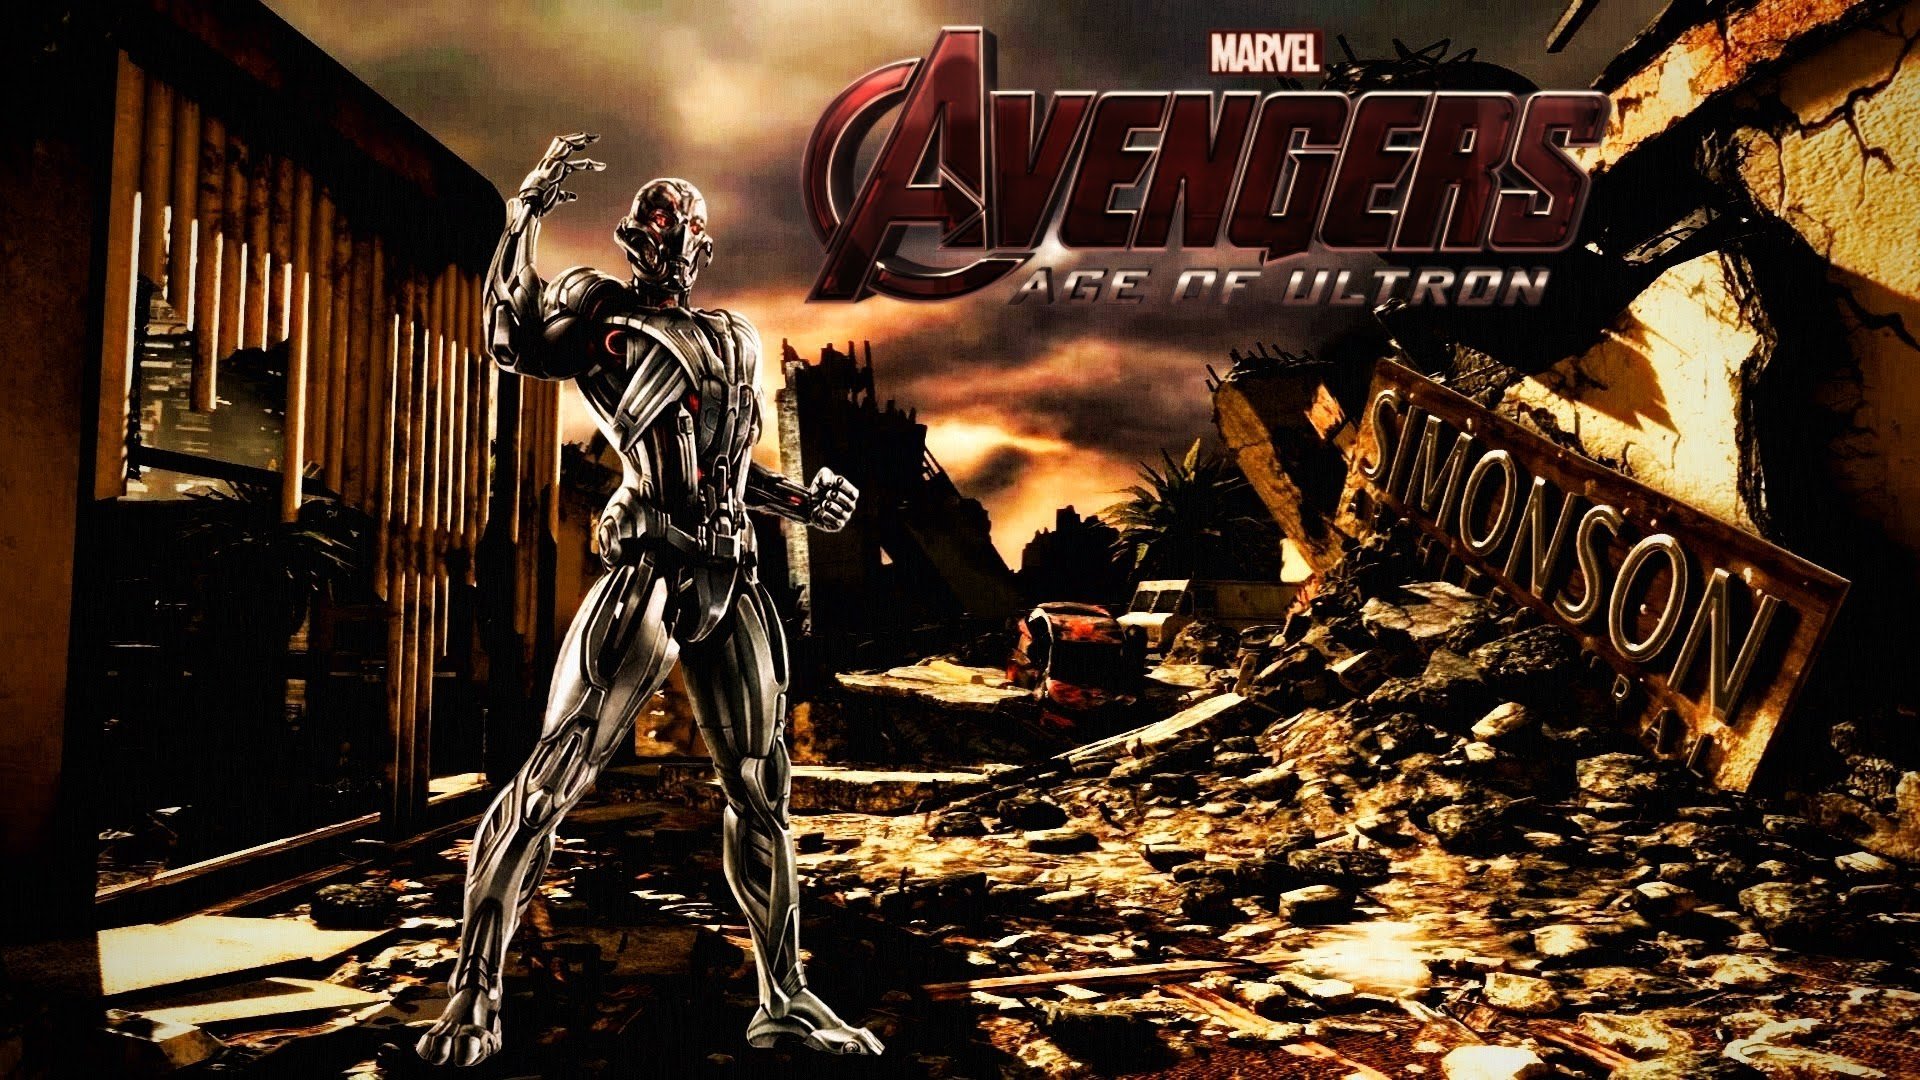 Avengers Age Of Ultron Superhero Action Adventure Comics Images, Photos, Reviews